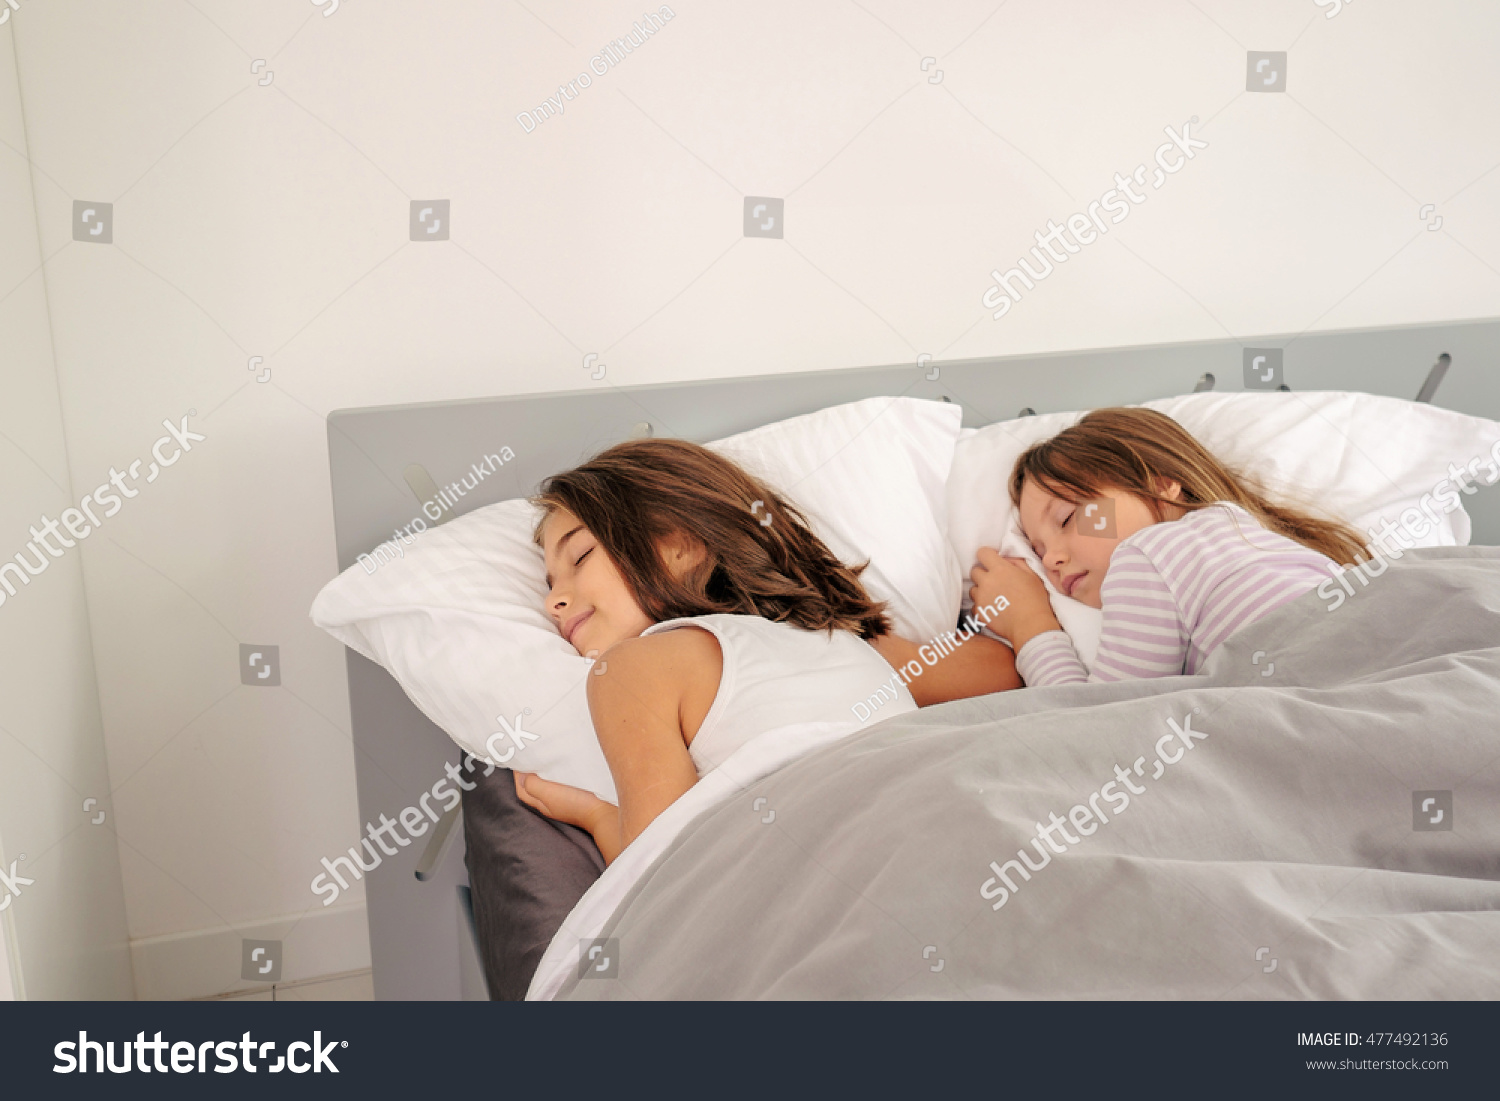 Две девочки спят